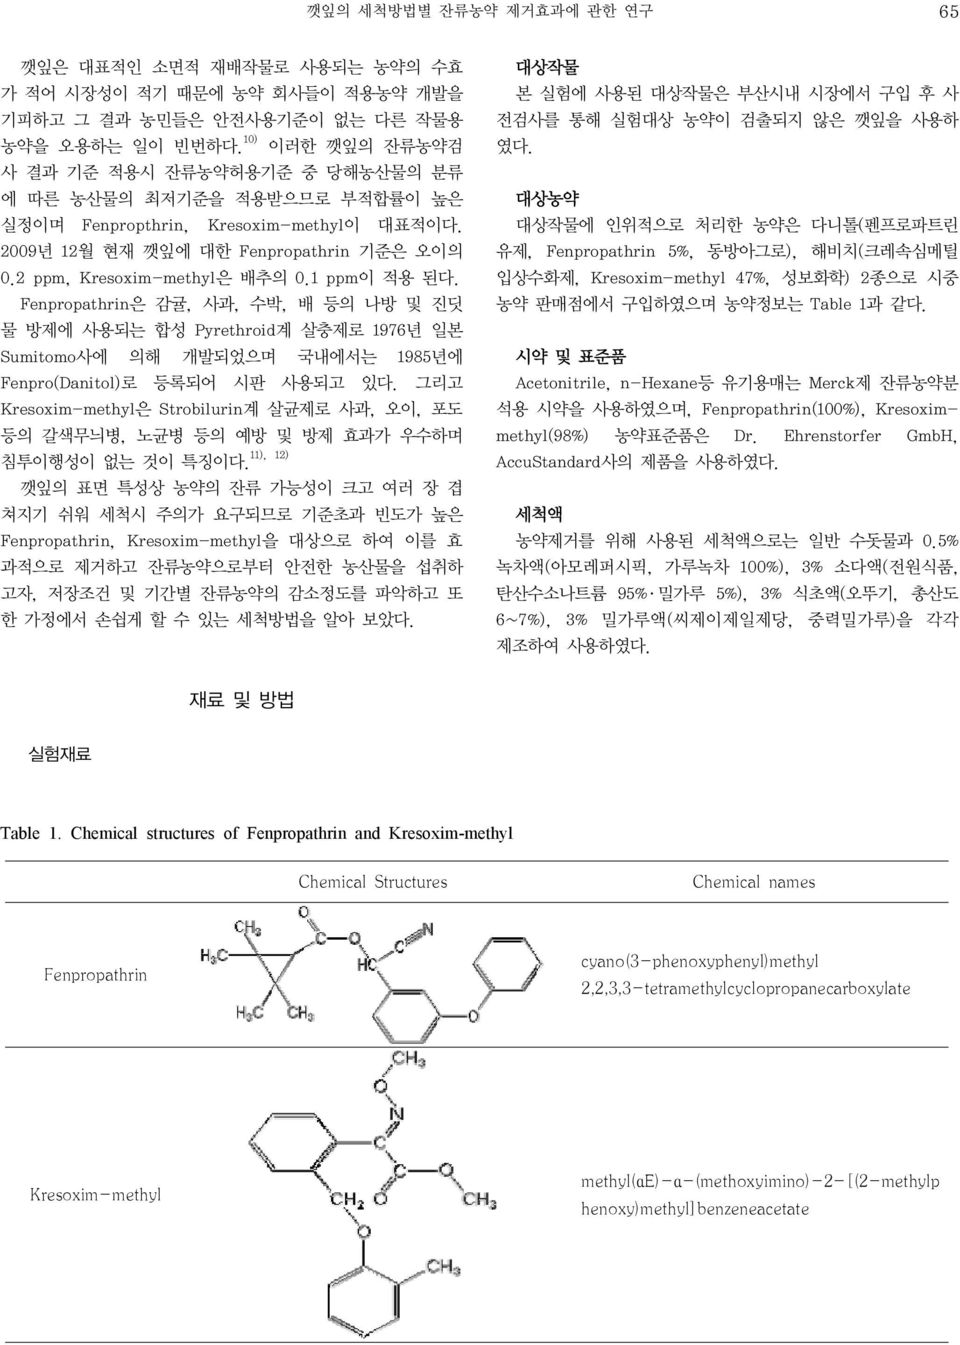 1 ppm이 적용 된다. Fenpropathrin은 감귤, 사과, 수박, 배 등의 나방 및 진딧 물 방제에 사용되는 합성 Pyrethroid계 살충제로 1976년 일본 Sumitomo사에 의해 개발되었으며 국내에서는 1985년에 Fenpro(Danitol)로 등록되어 시판 사용되고 있다.